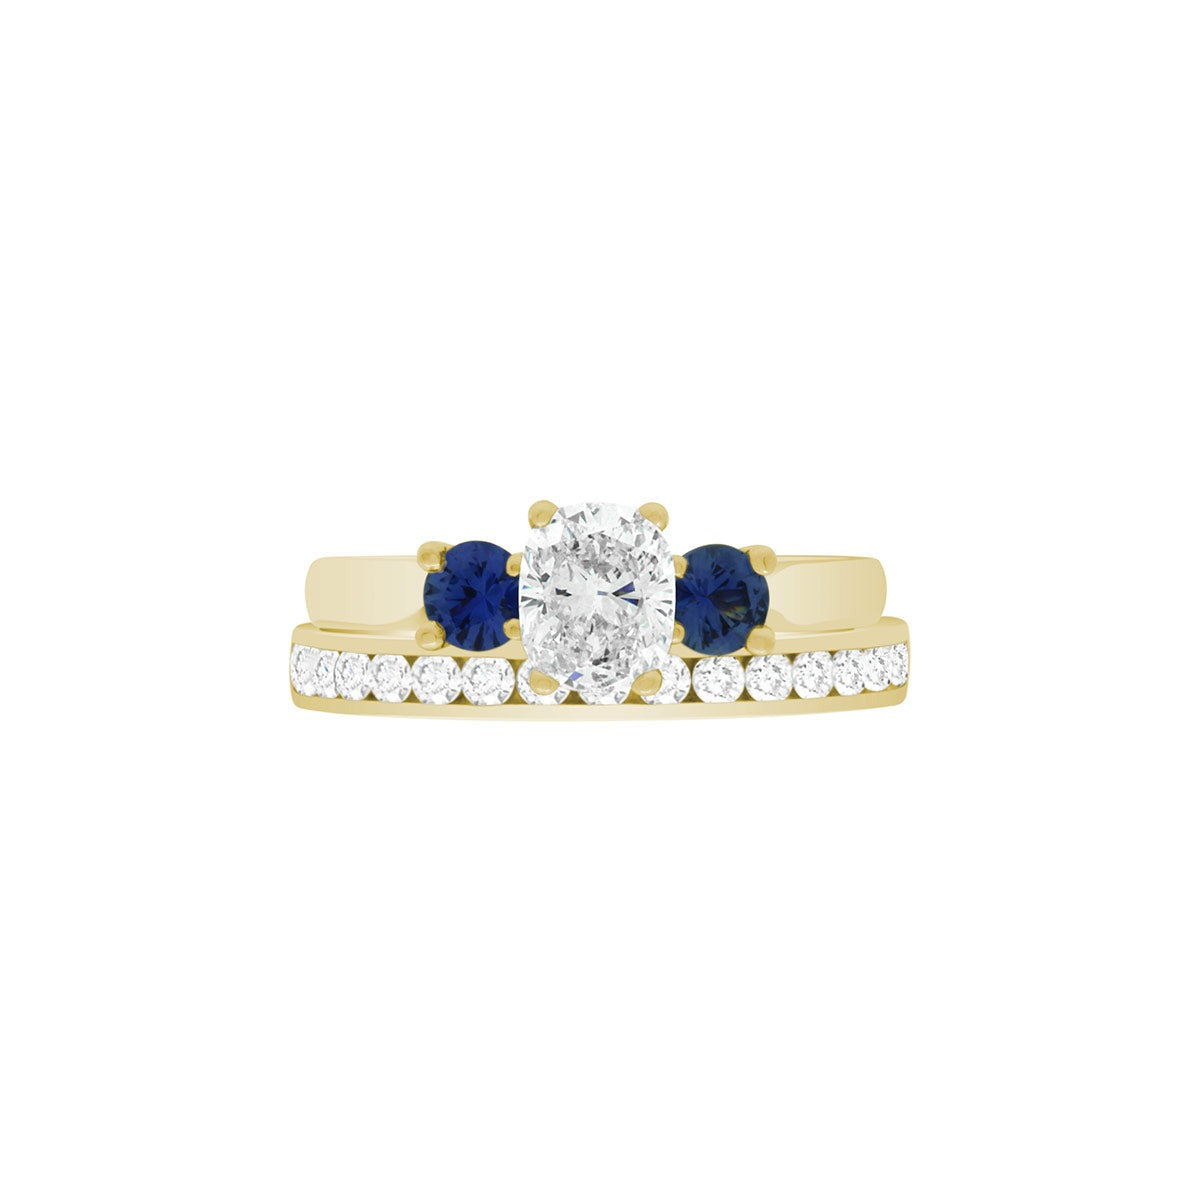 Diamond Sapphire Trilogy set in yellow gold with a matching diamond set wedding ring